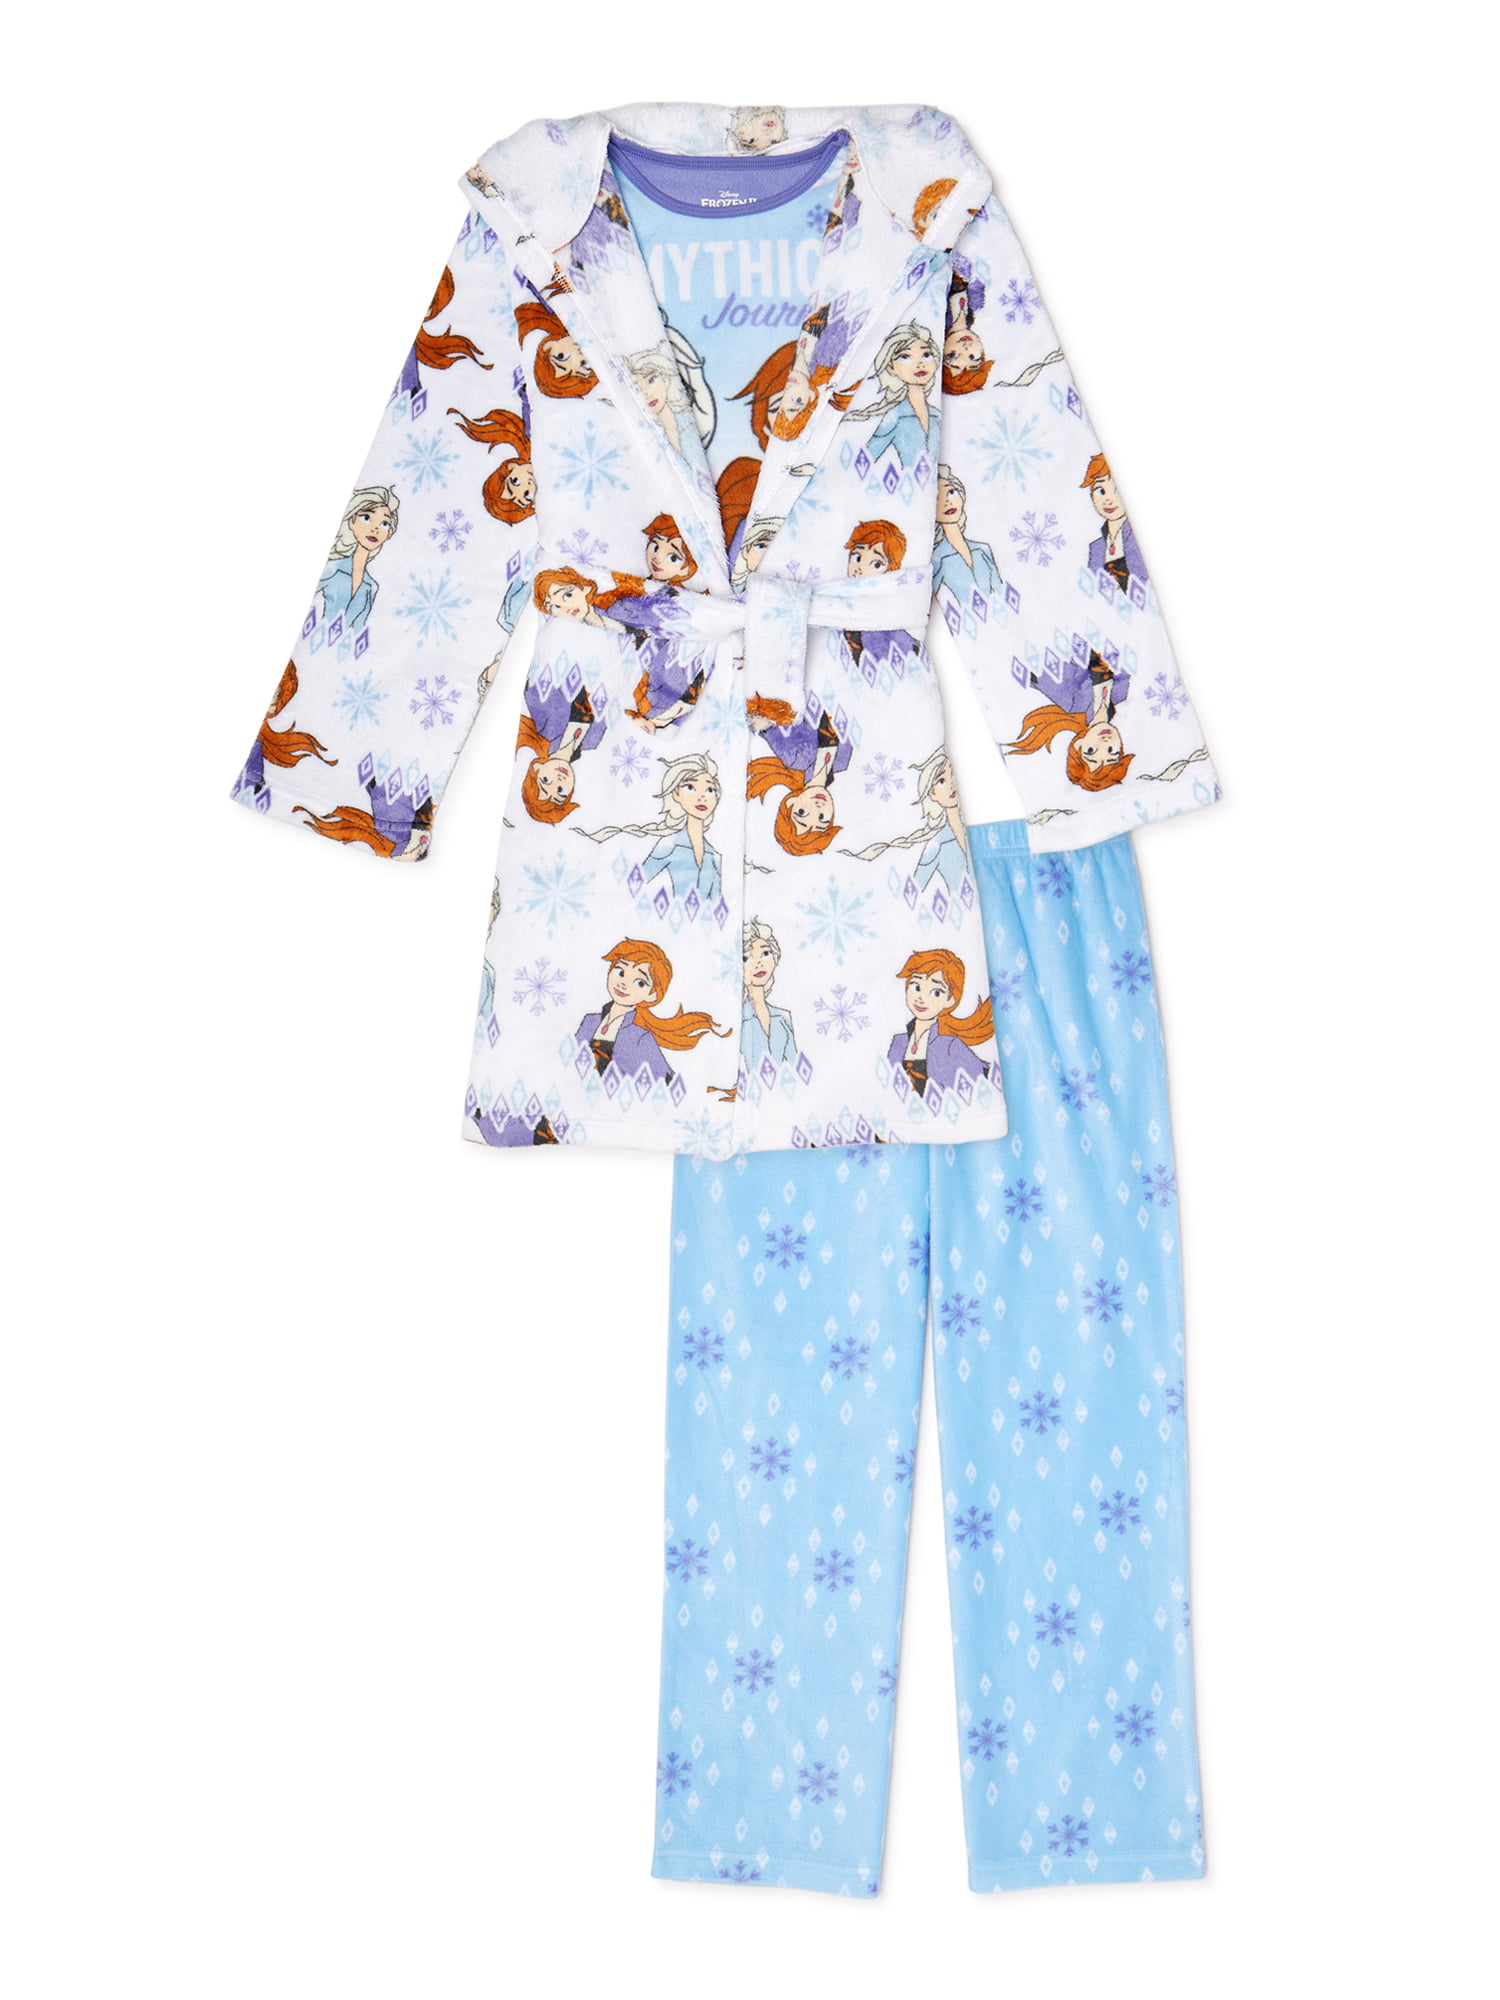 Frozen 2 Girls 2-Piece Pajama Set with Plush Robe Sizes 4-10